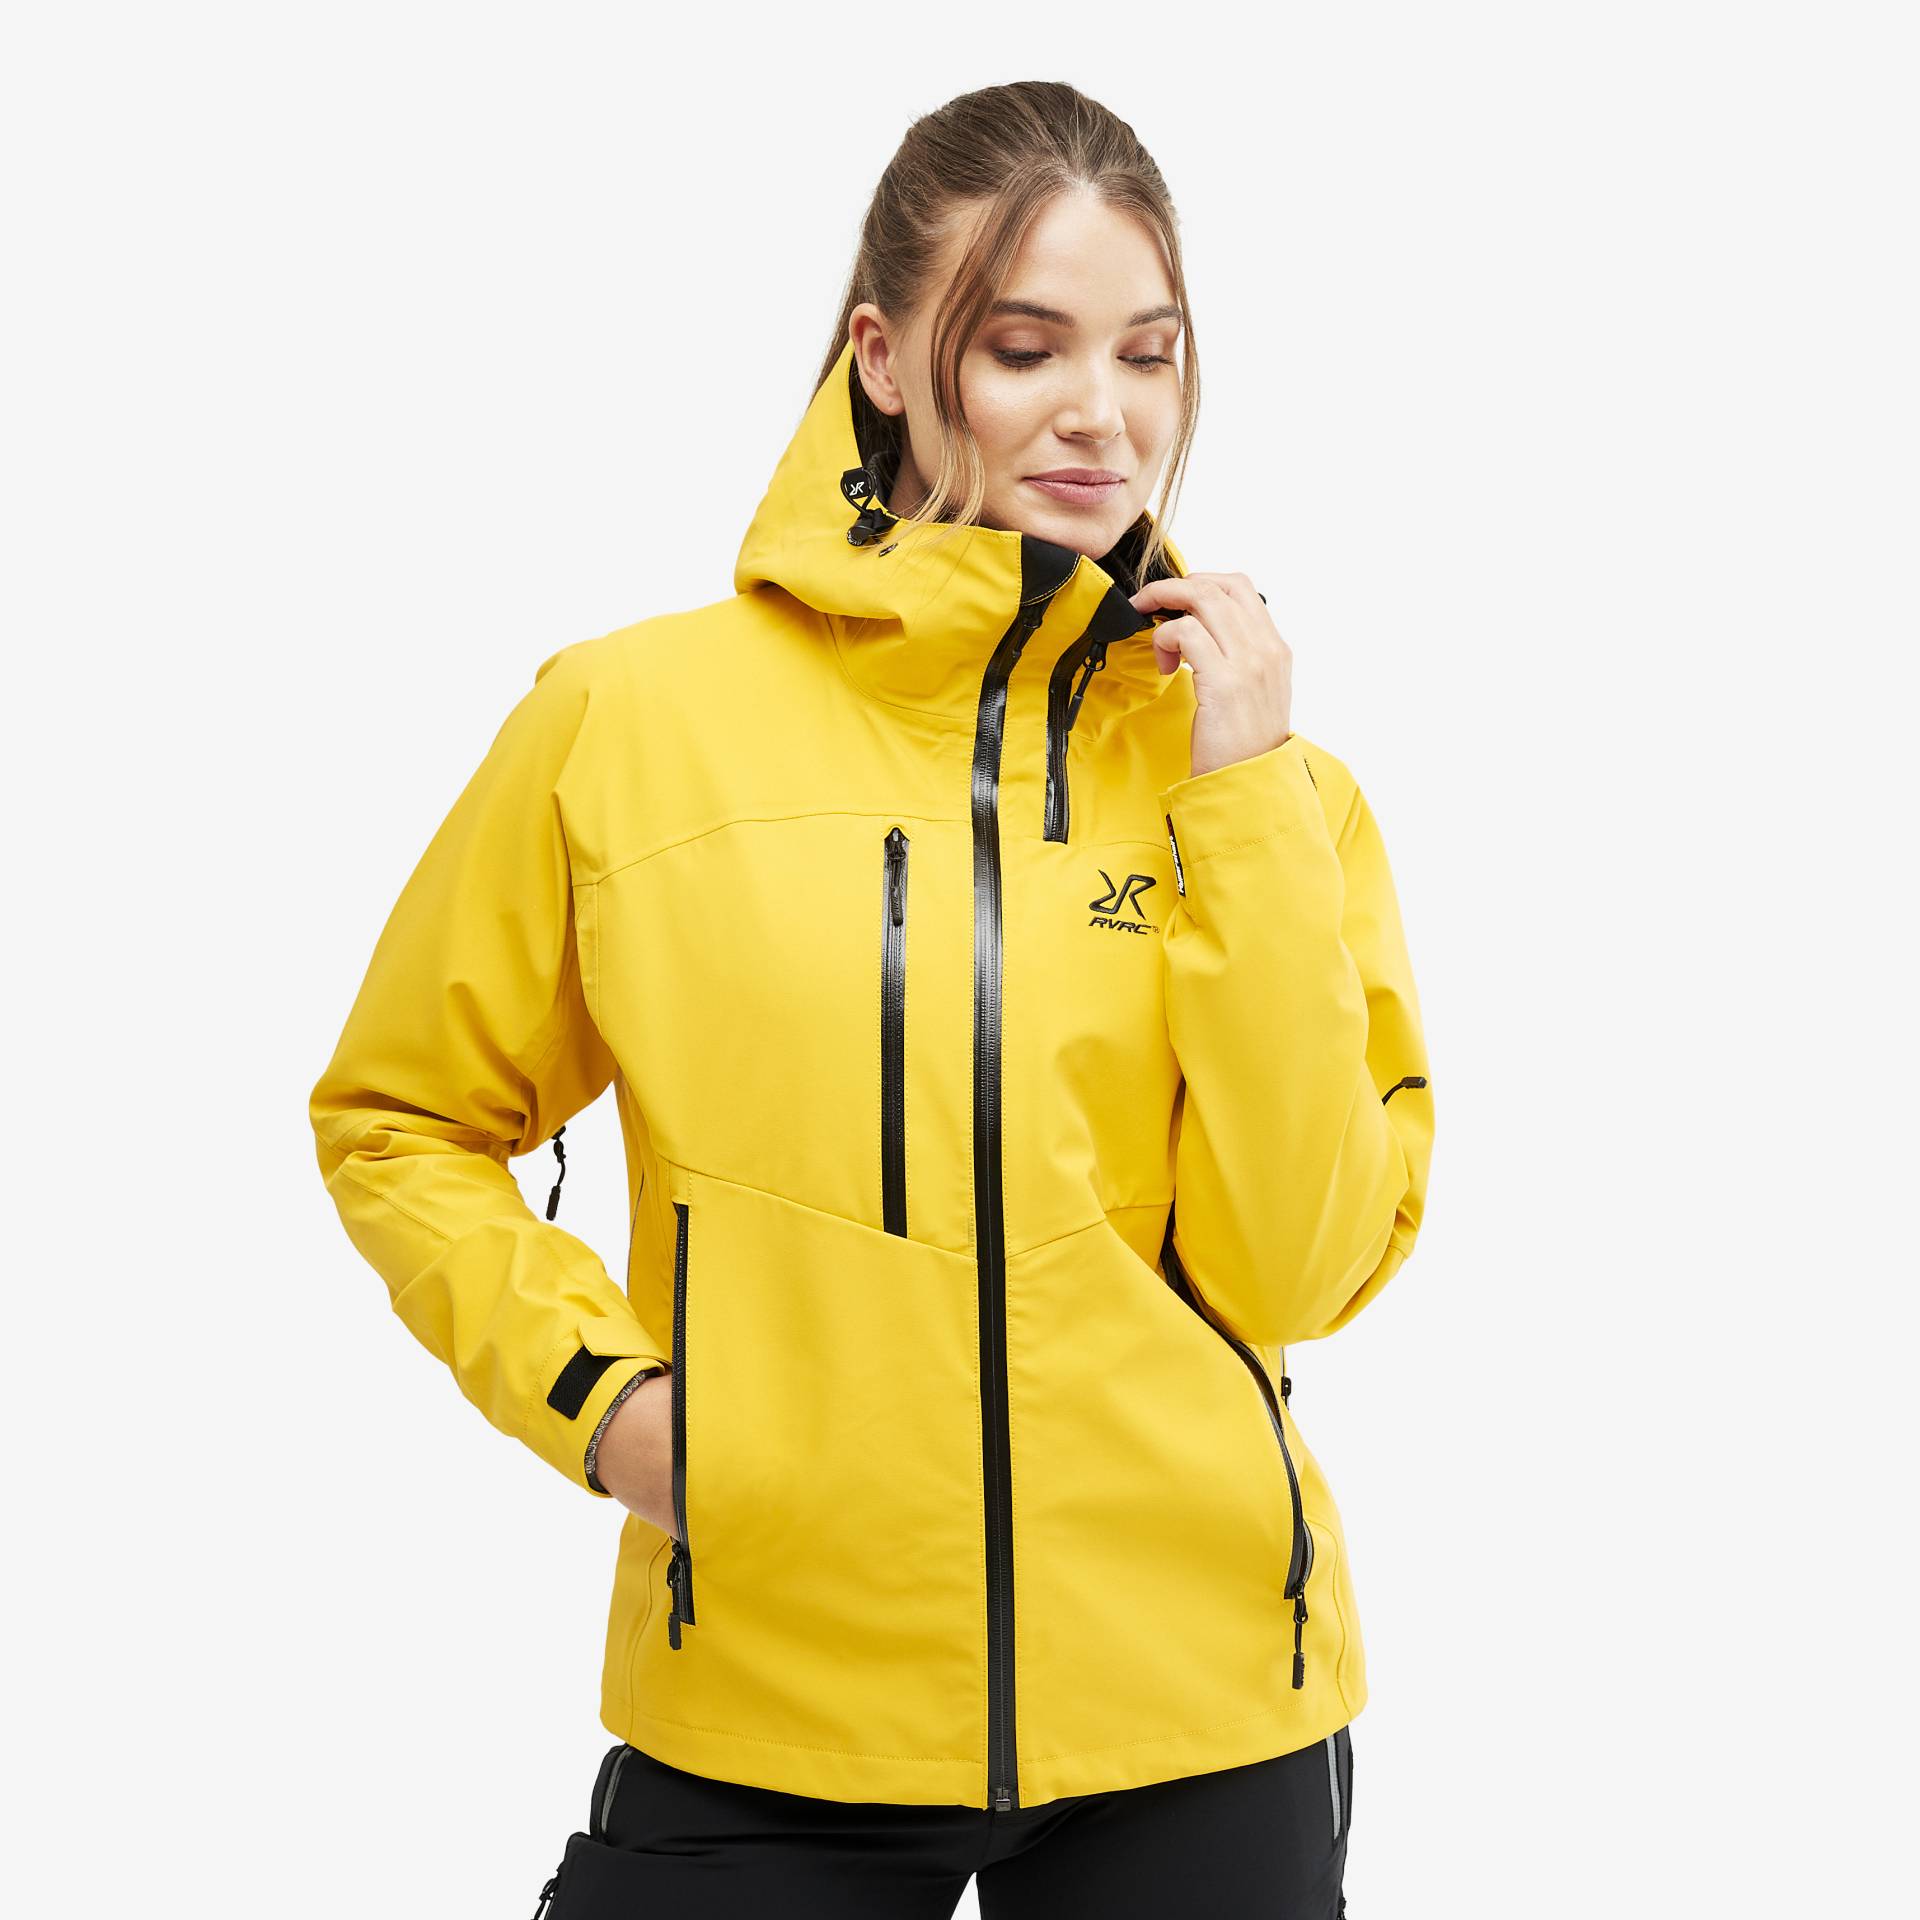 Cyclone Rescue Jacket 2.0 Damen Yellow, Größe:M - Outdoorjacke, Regenjacke & Softshelljacke von RevolutionRace